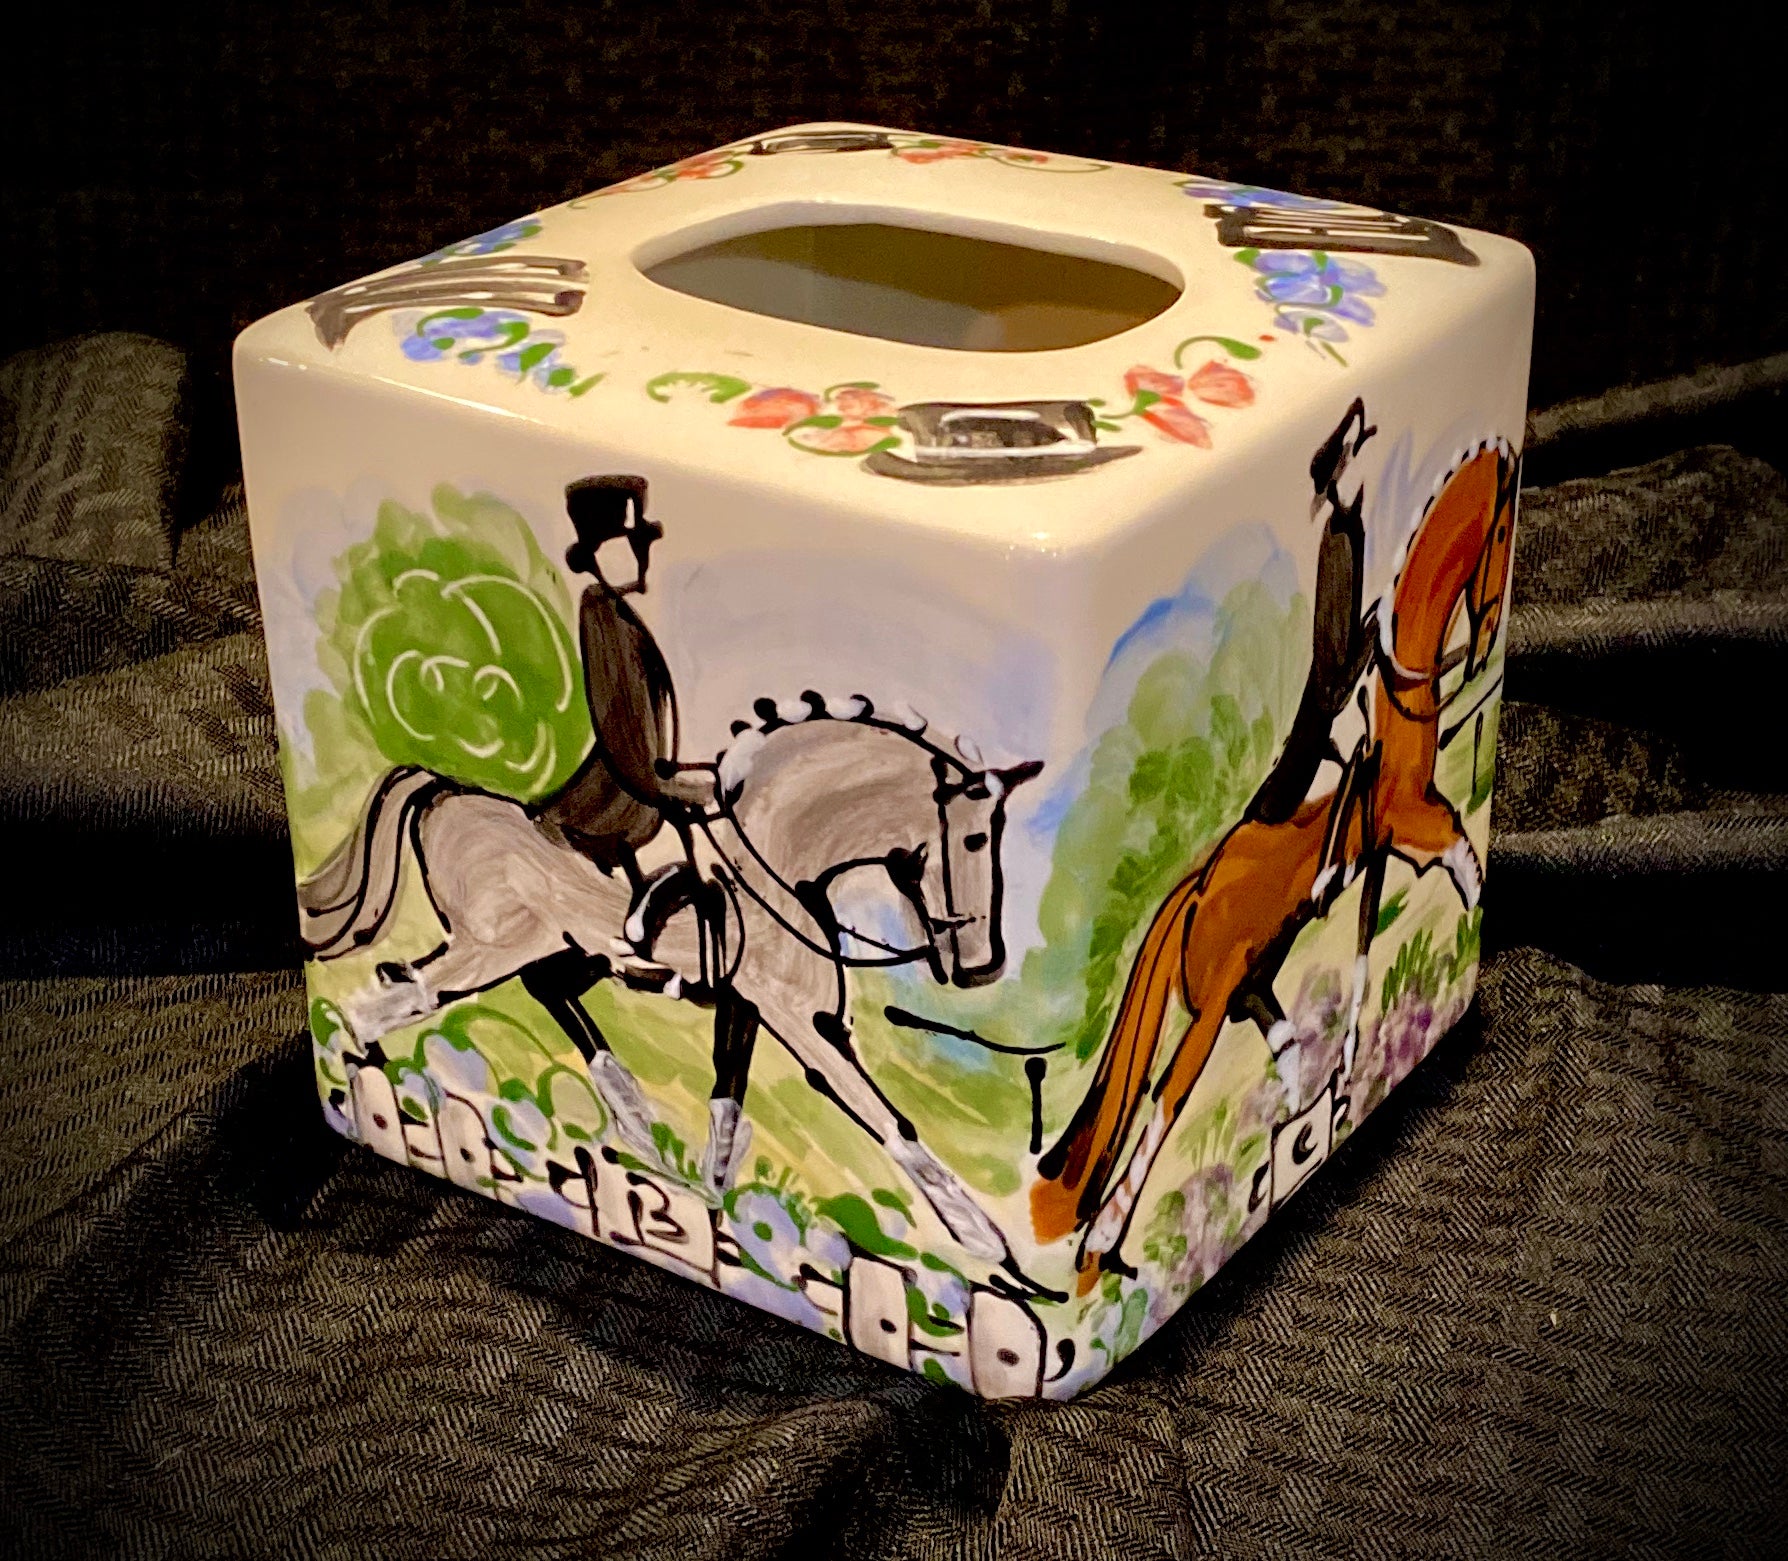 Equestrian Motif tissue box - 5.75